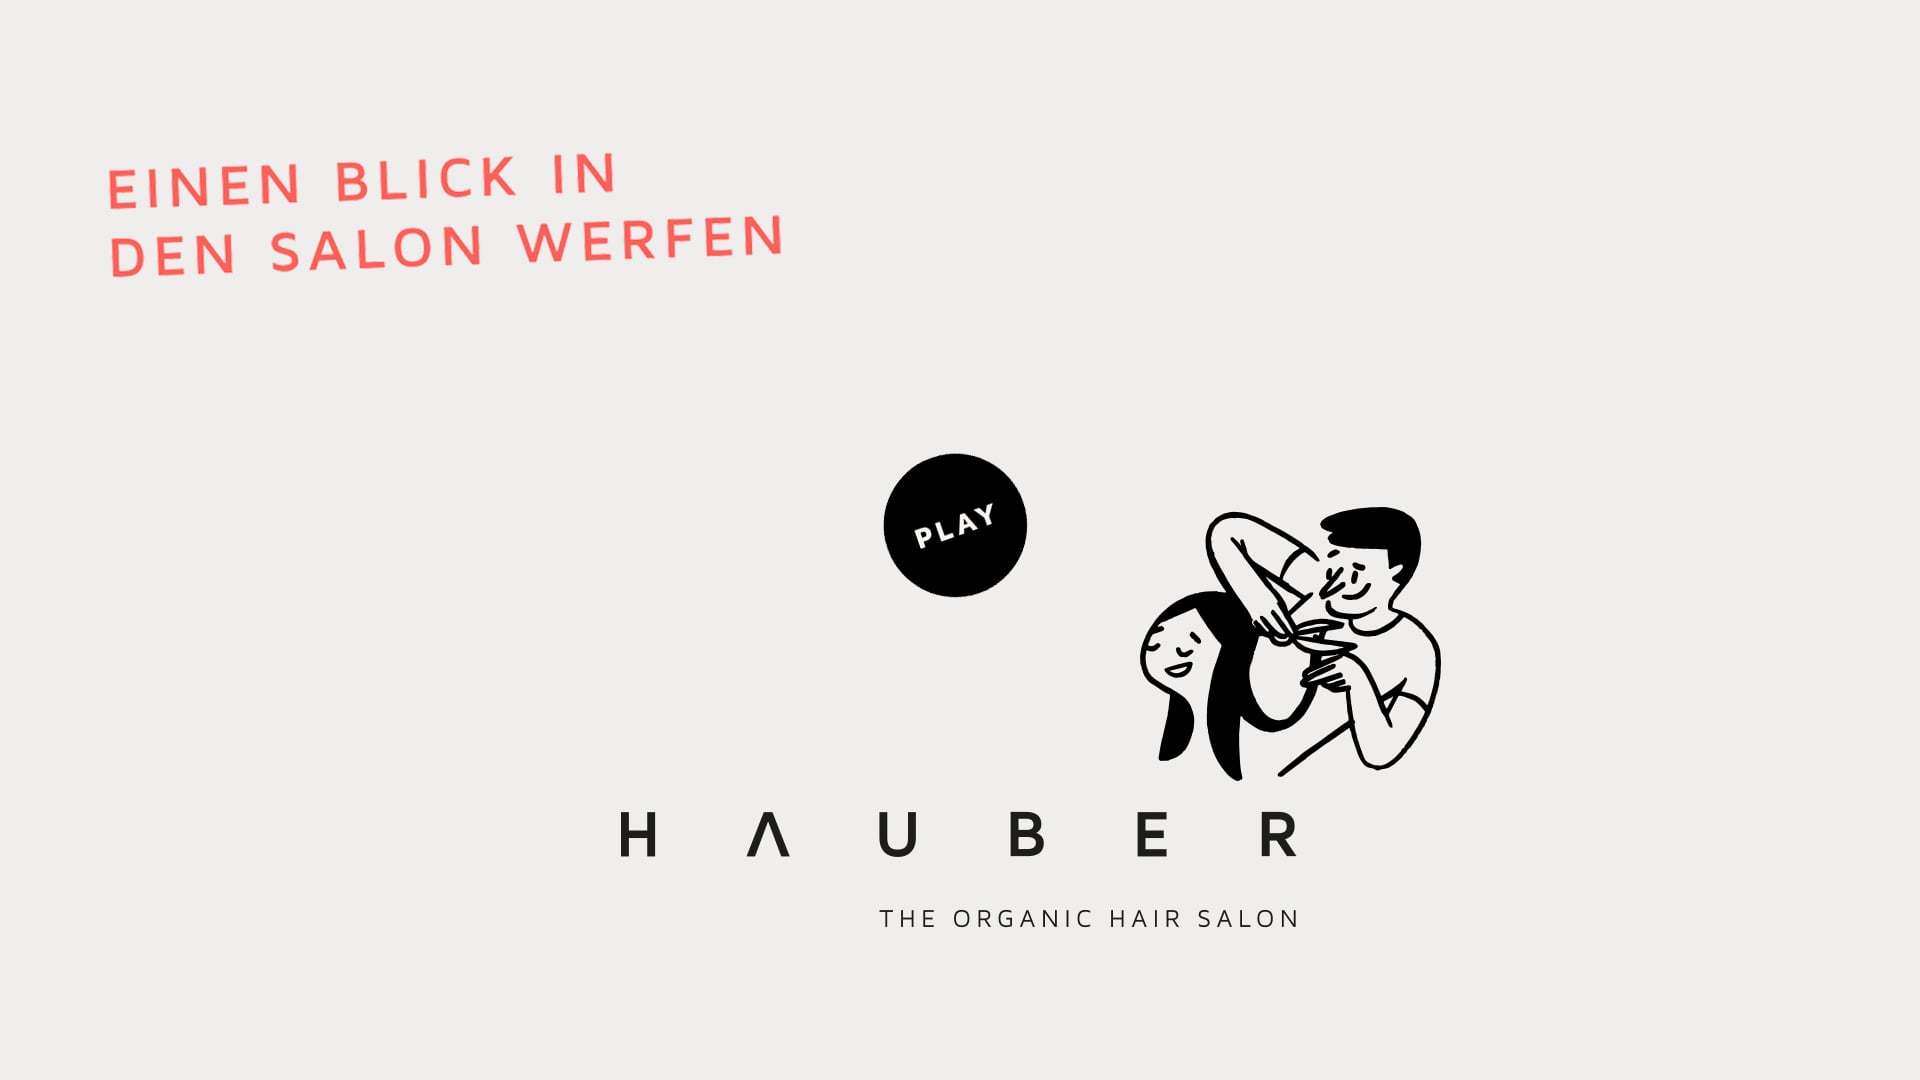 Hauber - The Organic Hair Salon